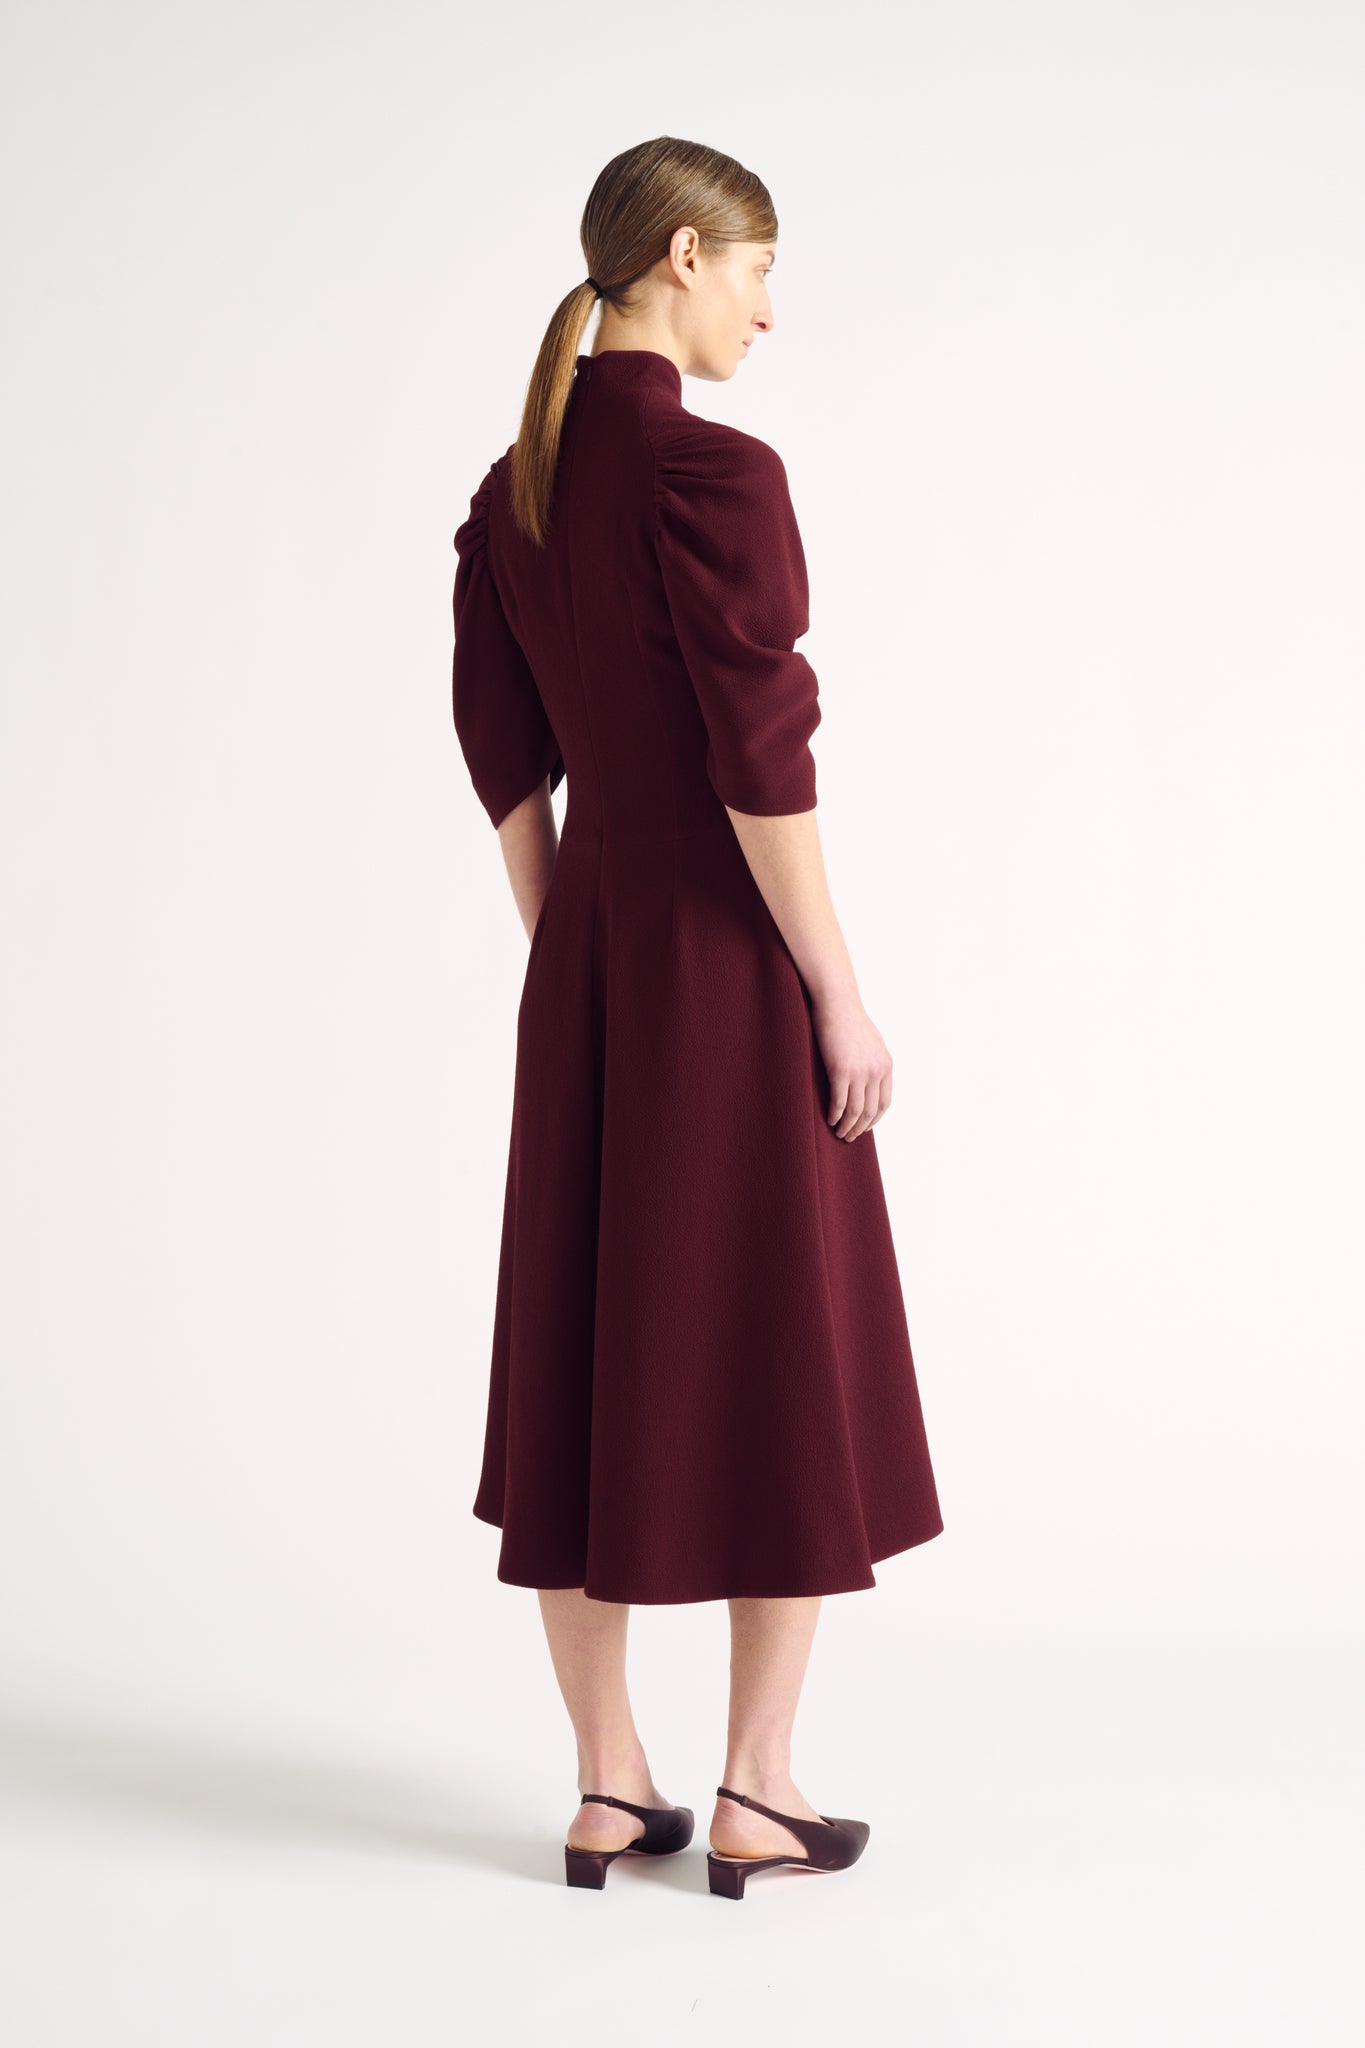 Marvel Dress| Burgundy Double Crepe Gathered Sleeve Dress | Emilia Wickstead